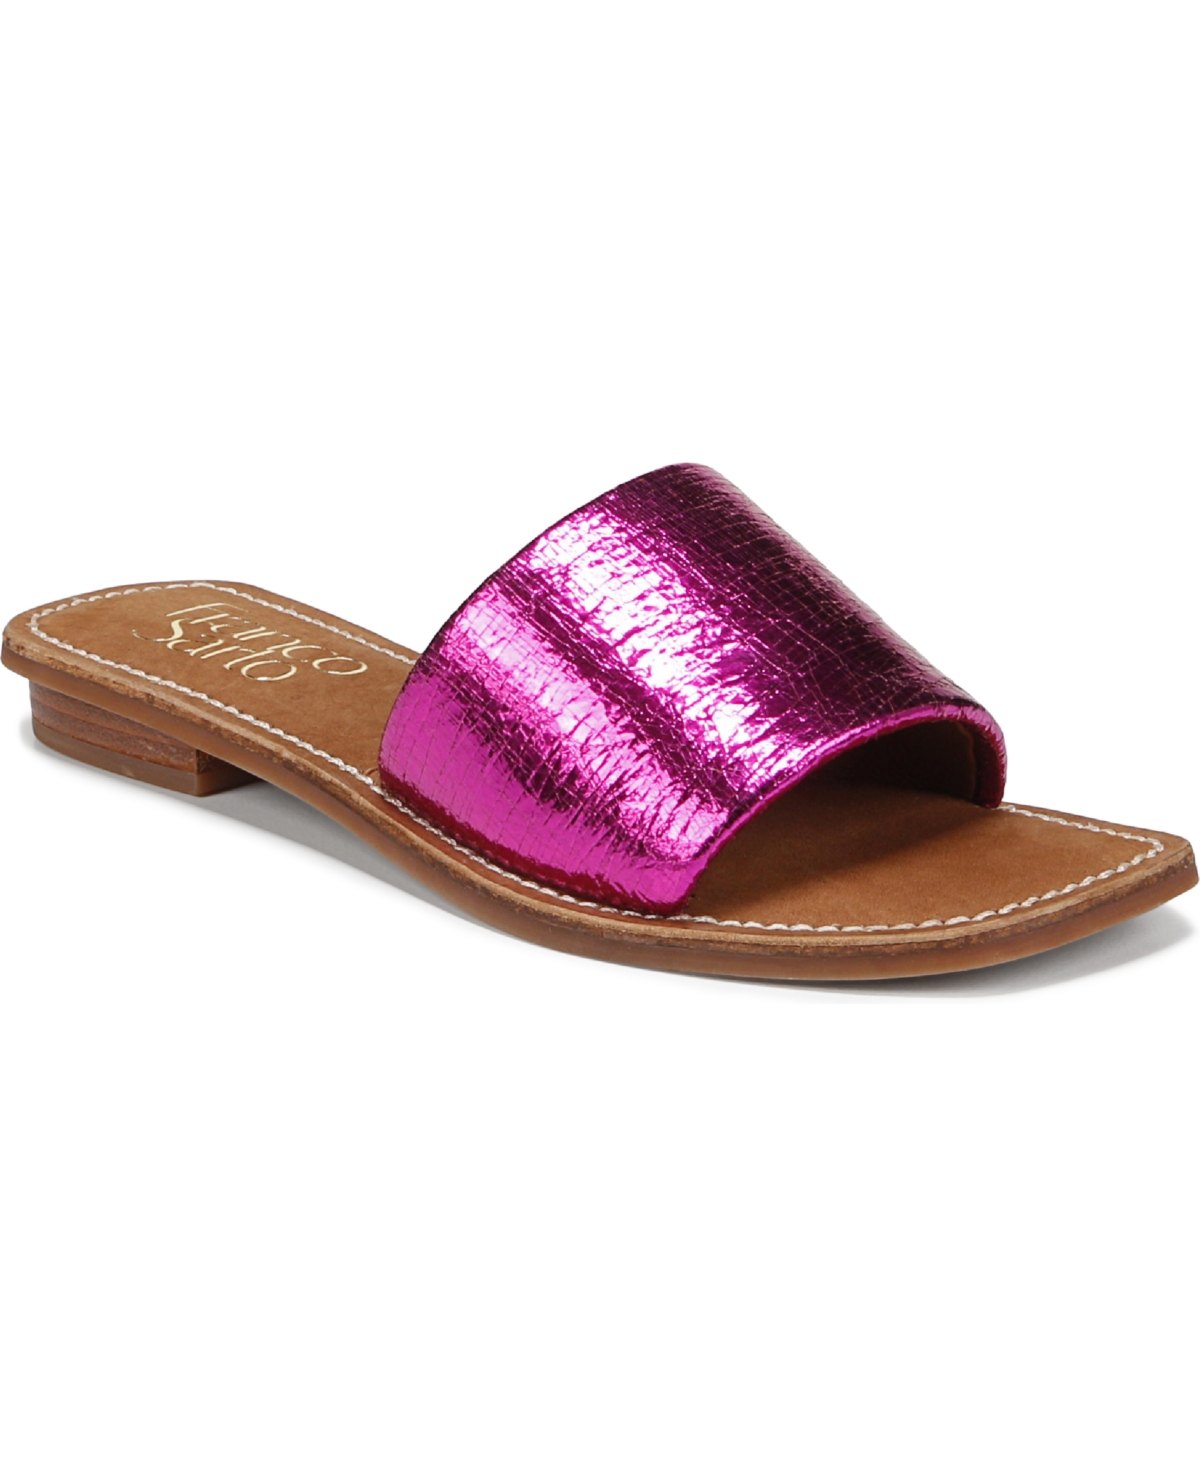 Tina Slide Sandals - Metallic Pink Cracked Leather